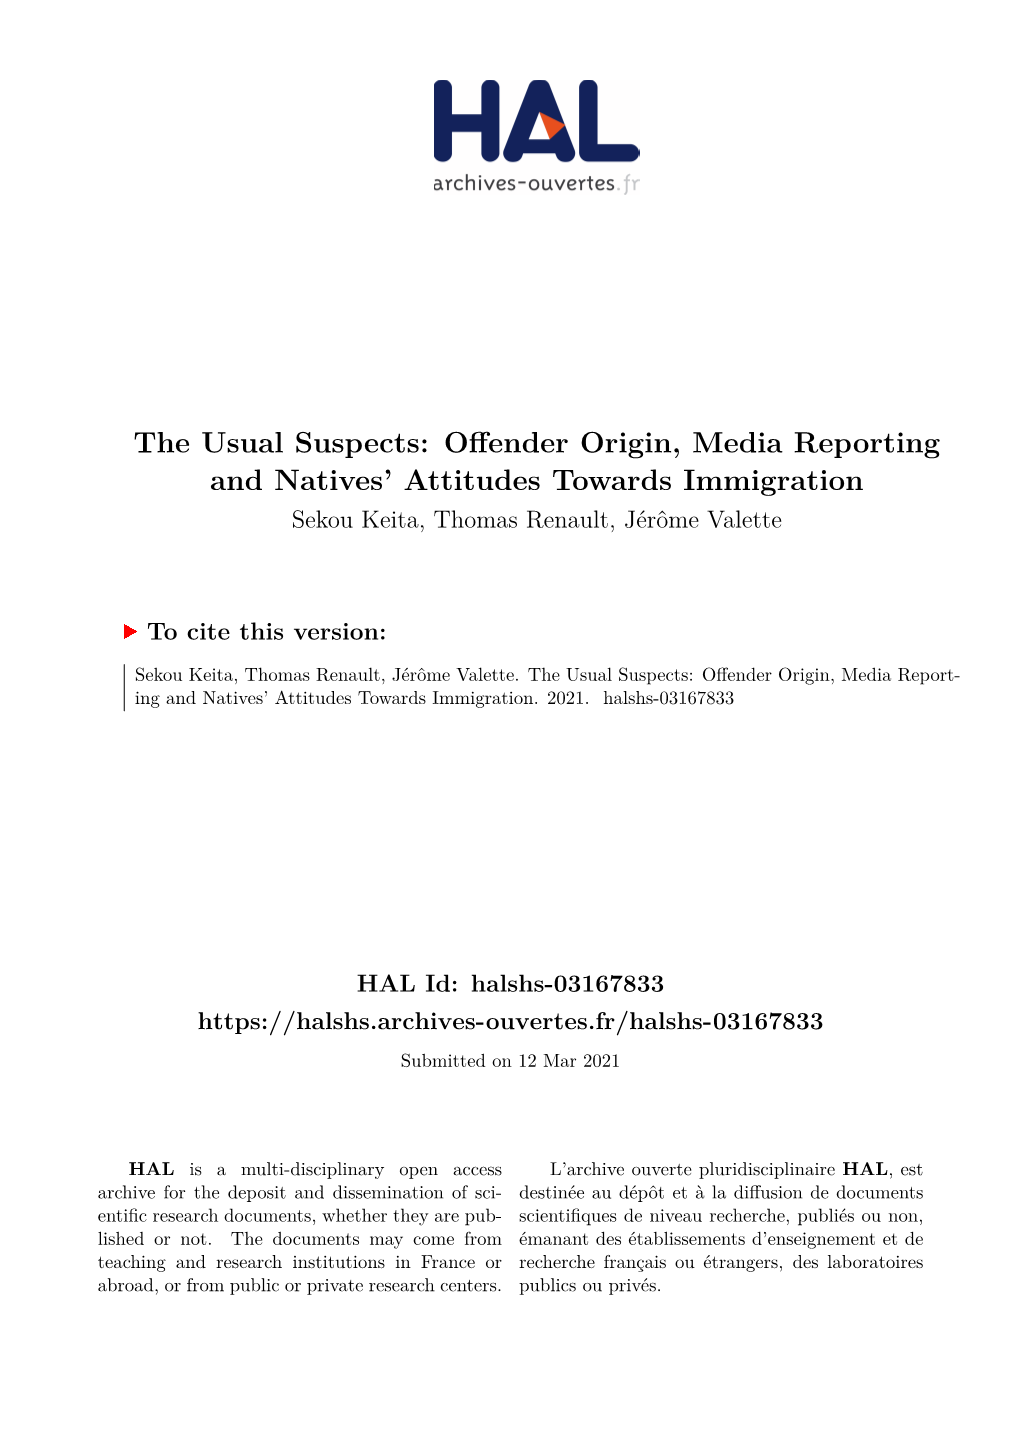 Offender Origin, Media Reporting and Natives' Attitudes Towards